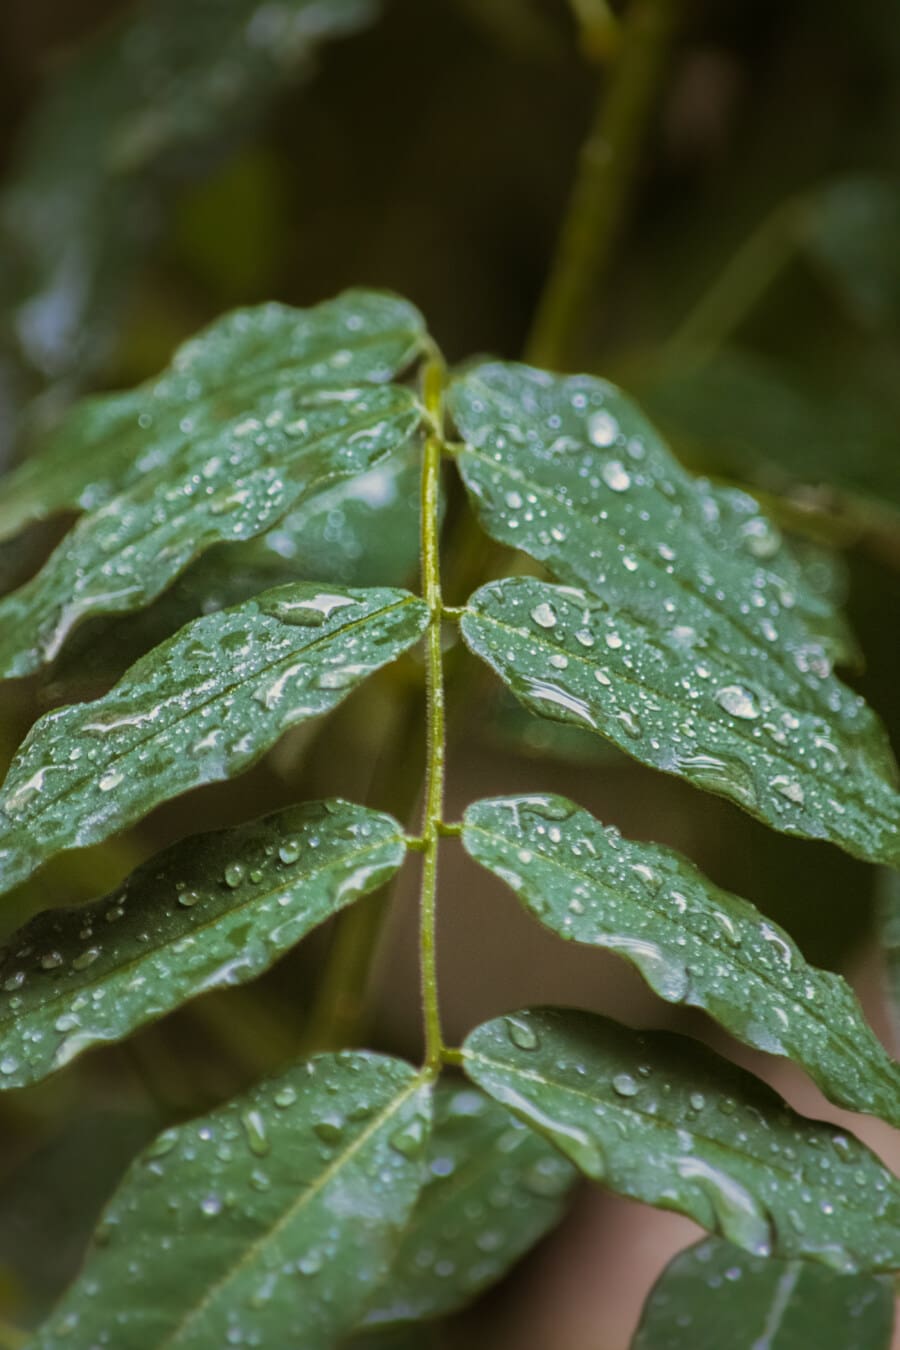 raindrop, rainy season, rain, green leaves, rain forest, moisture, dew, herb, plant, nature